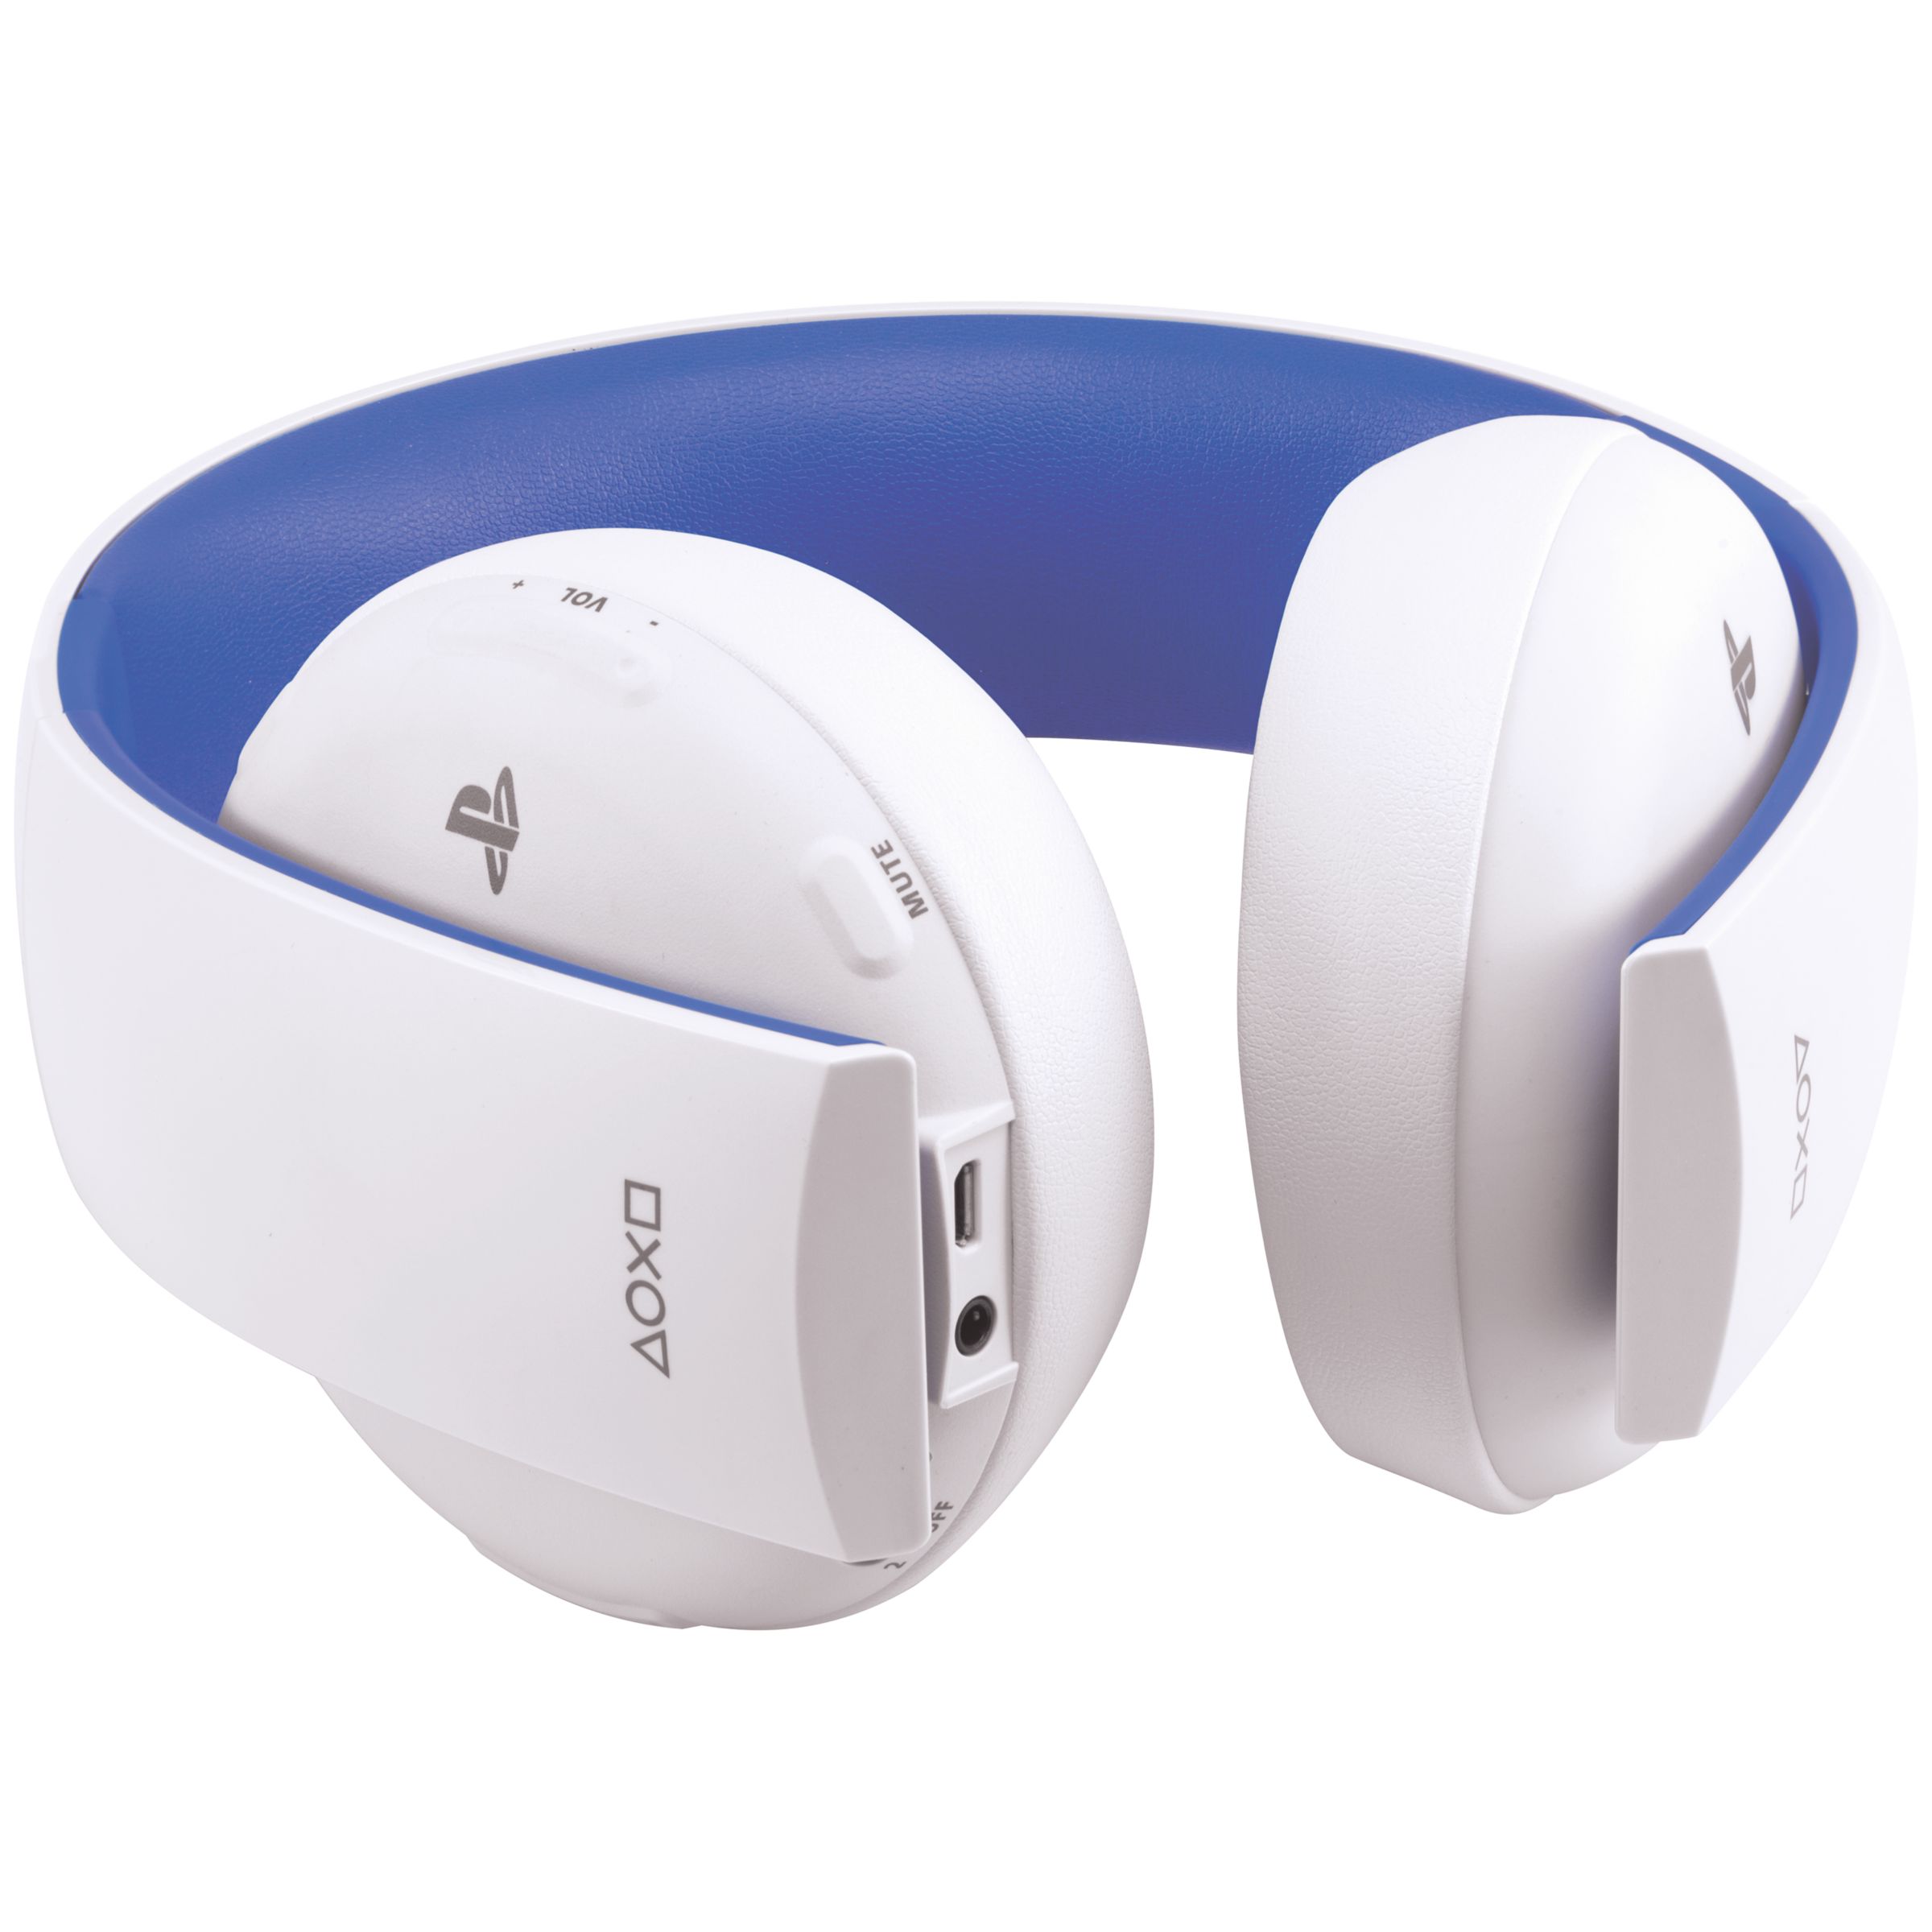 ps4 headset wireless white